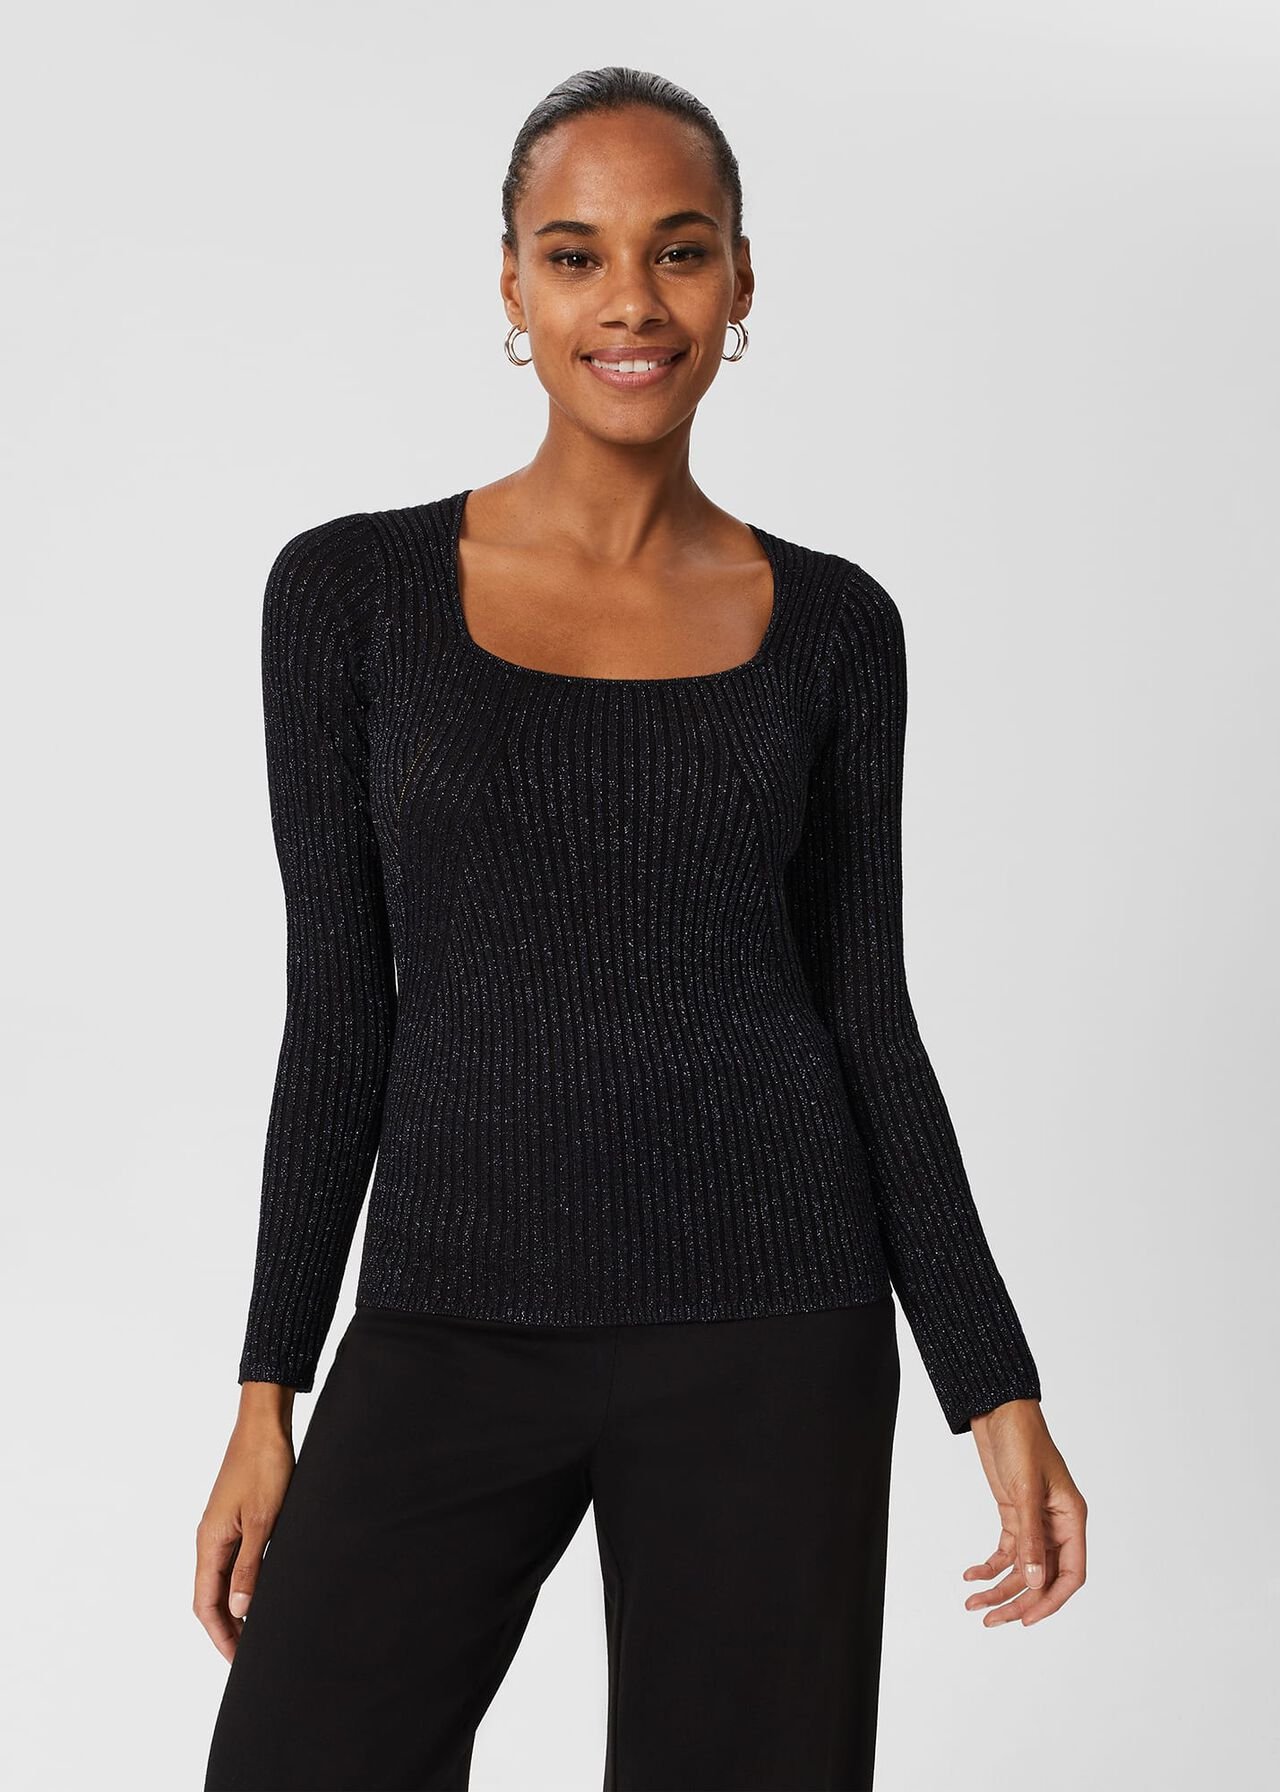 Mariella Square Neck Sweater, Black, hi-res